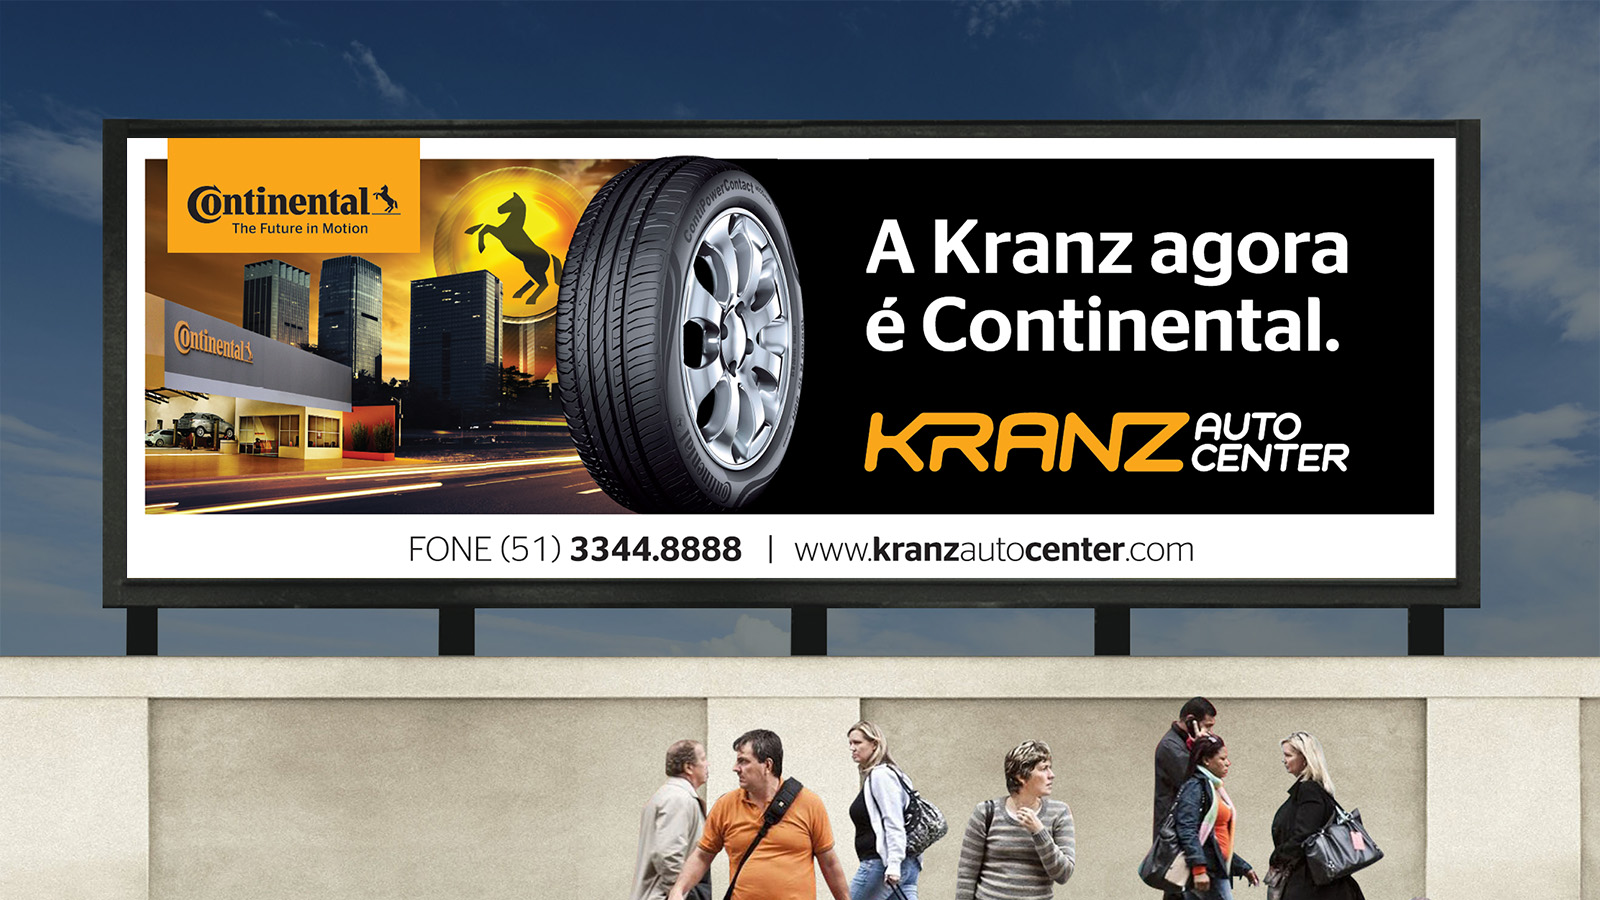 Kranz Auto Center - Continental